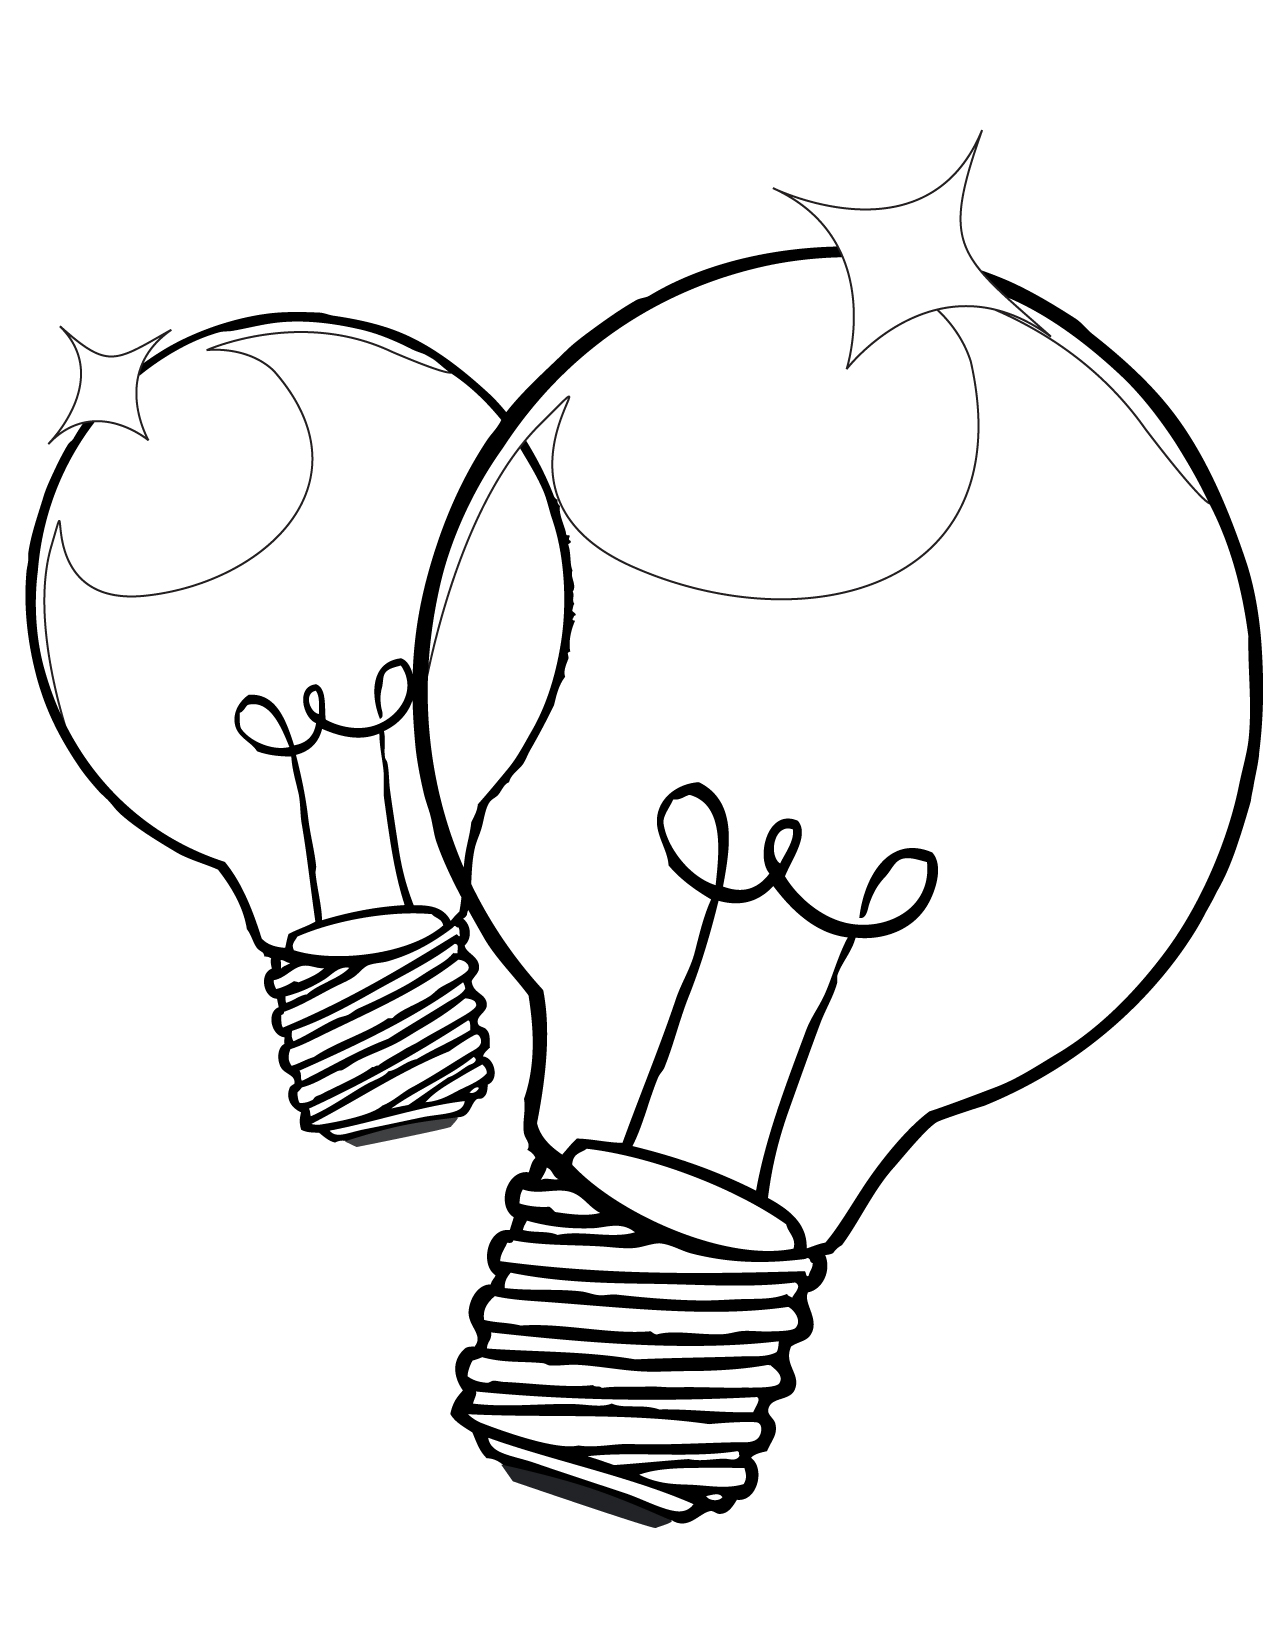 Light Bulb Coloring Sheet, christmas light bulb coloring page.